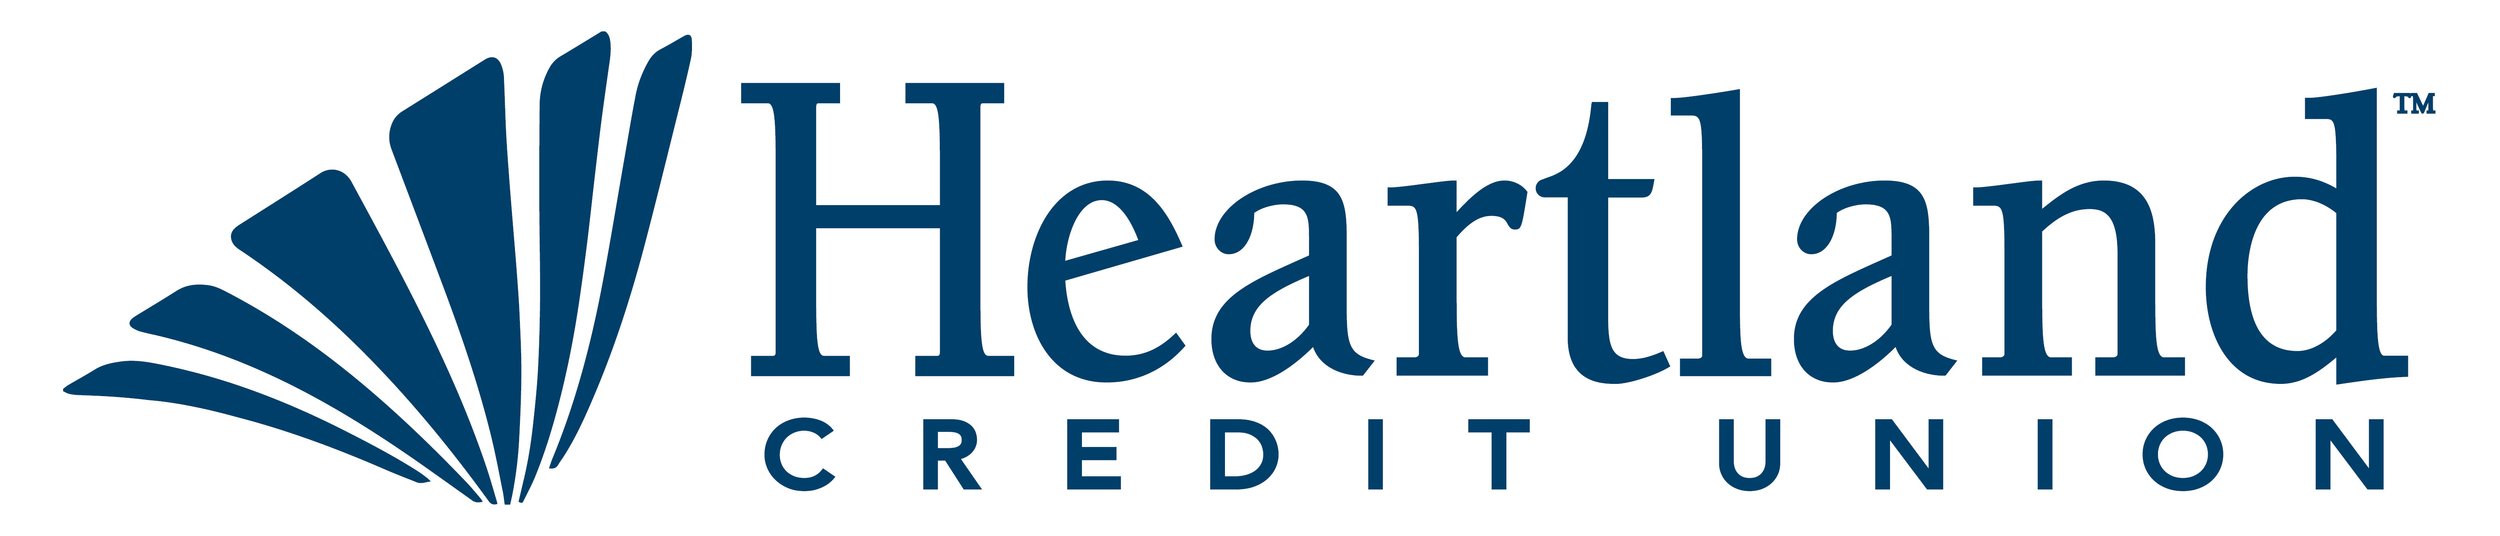 Heartland Credit Union Logo - Web.jpg